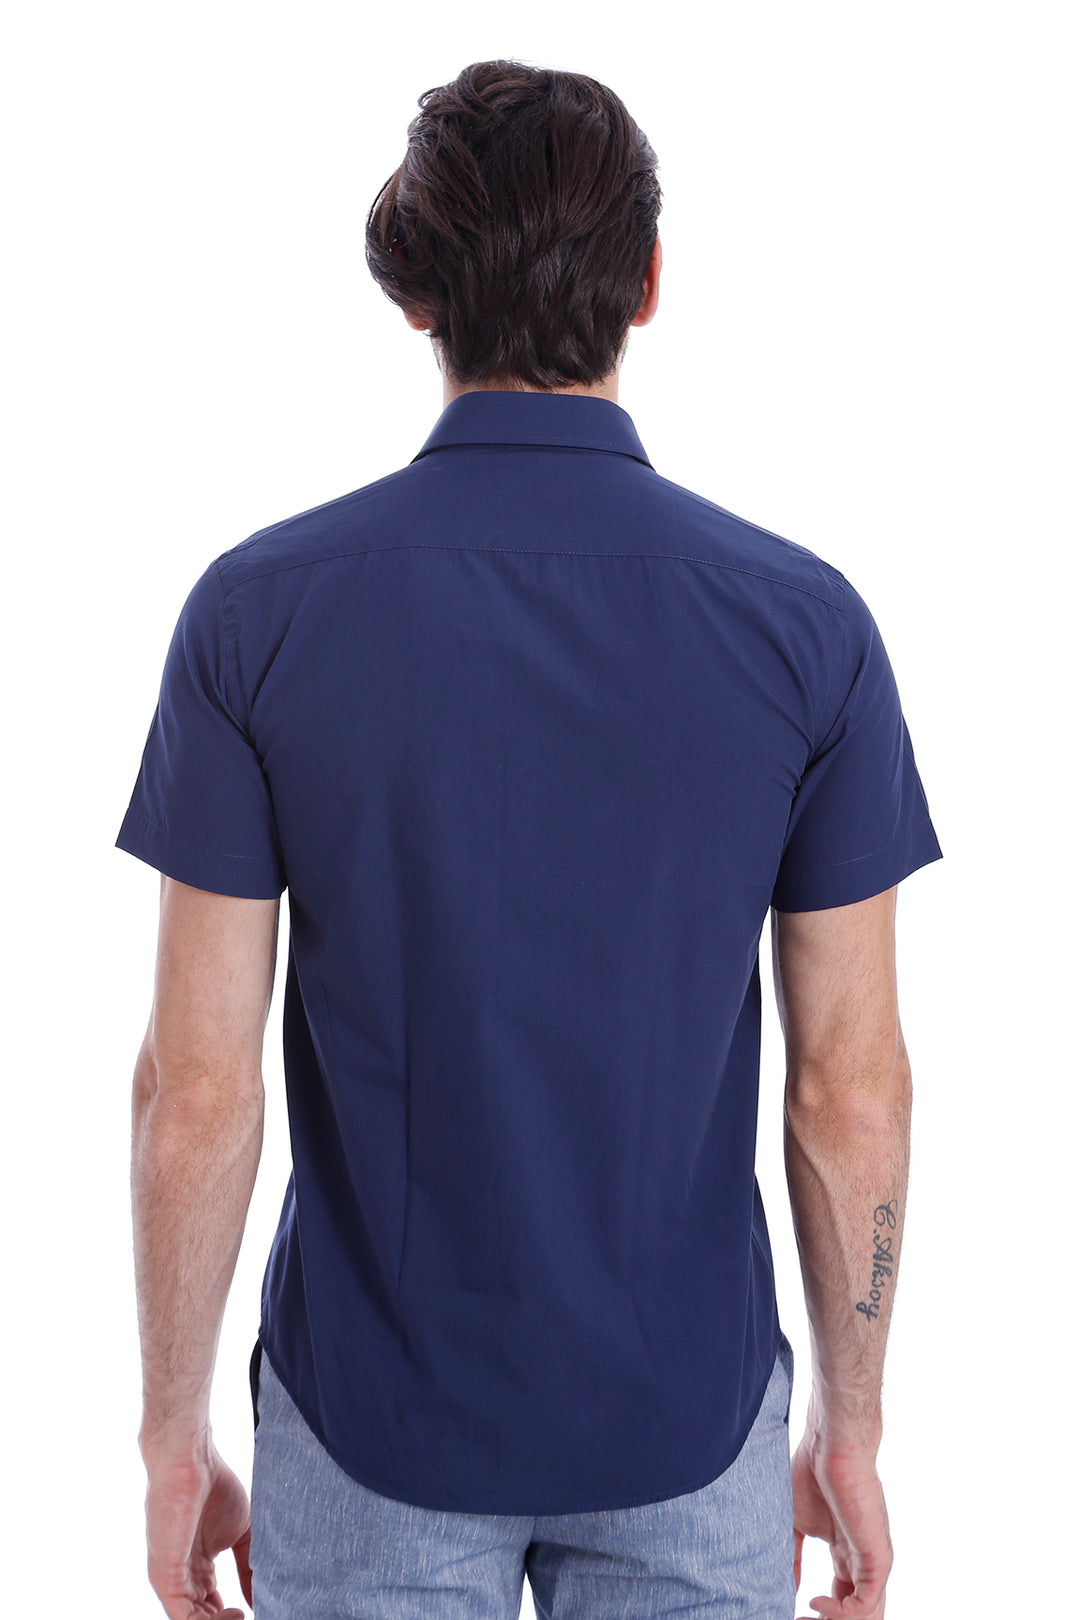 Short Sleeve Poly Cotton Slim Fit Navy Blue Men Shirt - Wessi